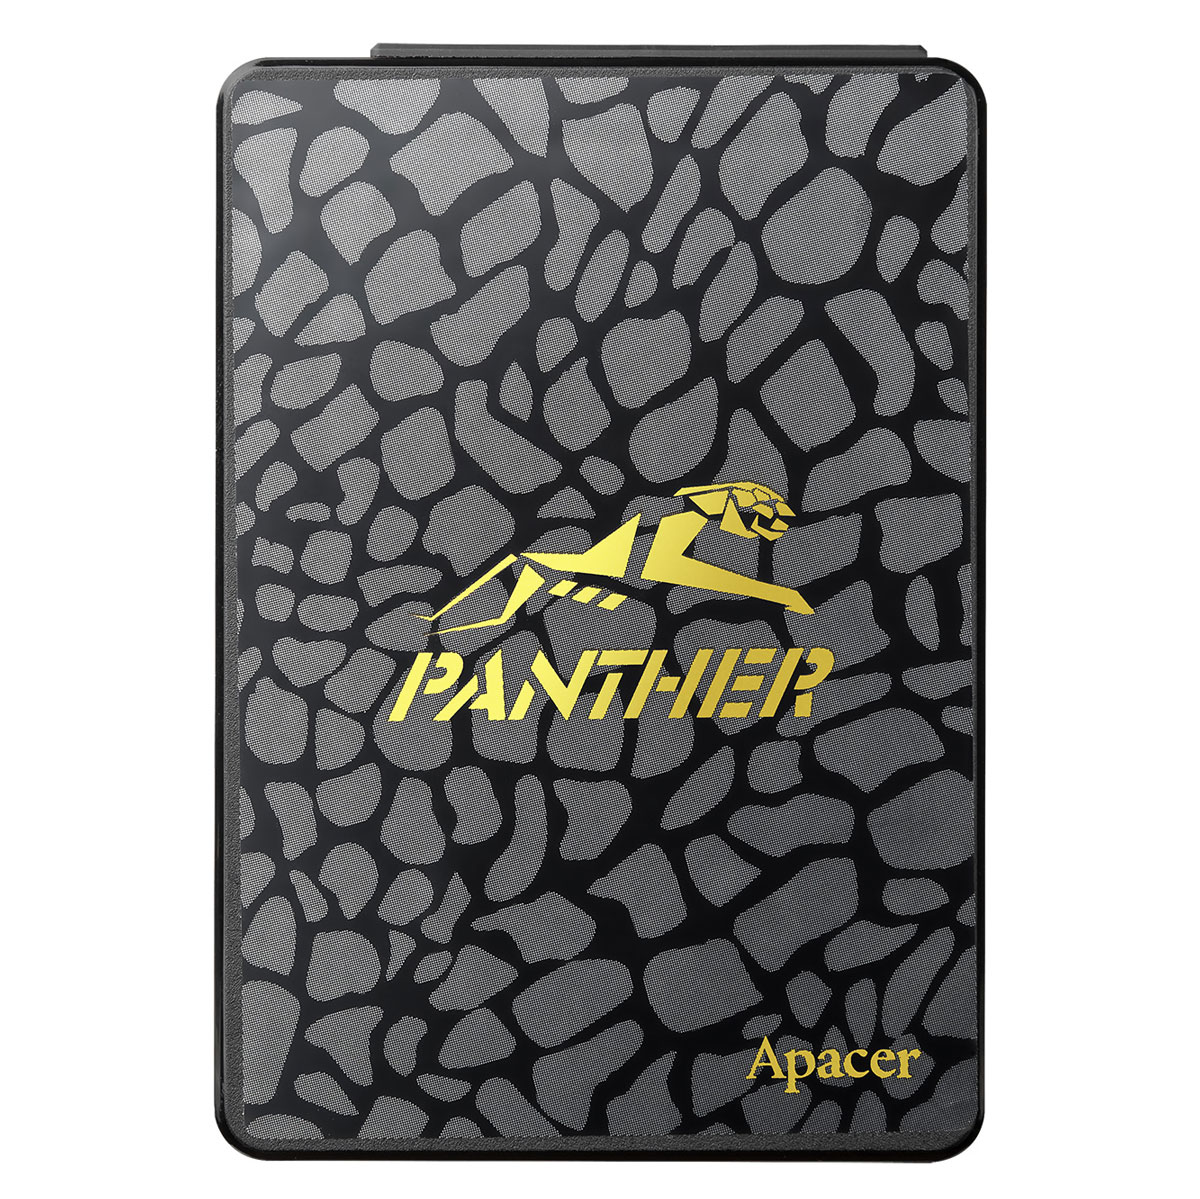 APACER Introduces AS340 PANTHER SATAIII SSD